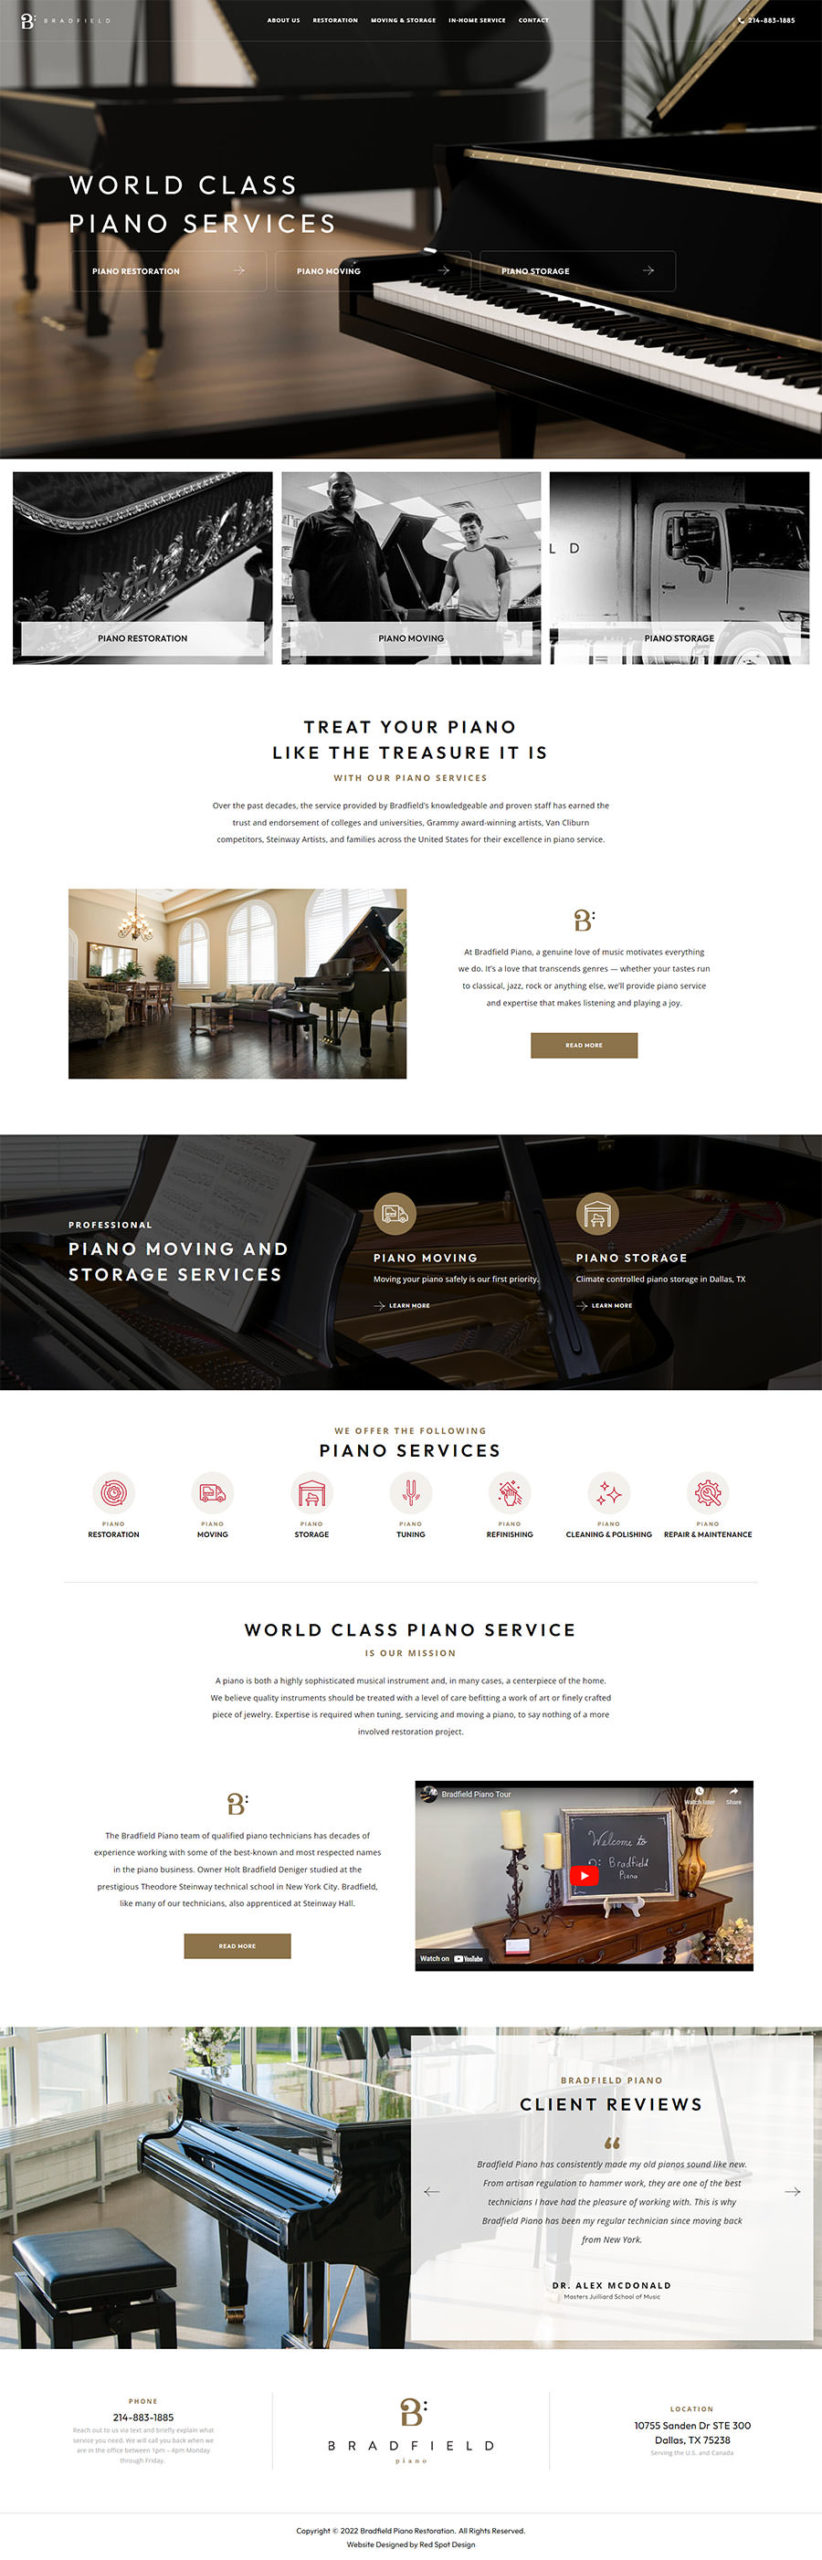 bradfield pianos website design 10755 Sanden Dr STE 300 Dallas TX 75238